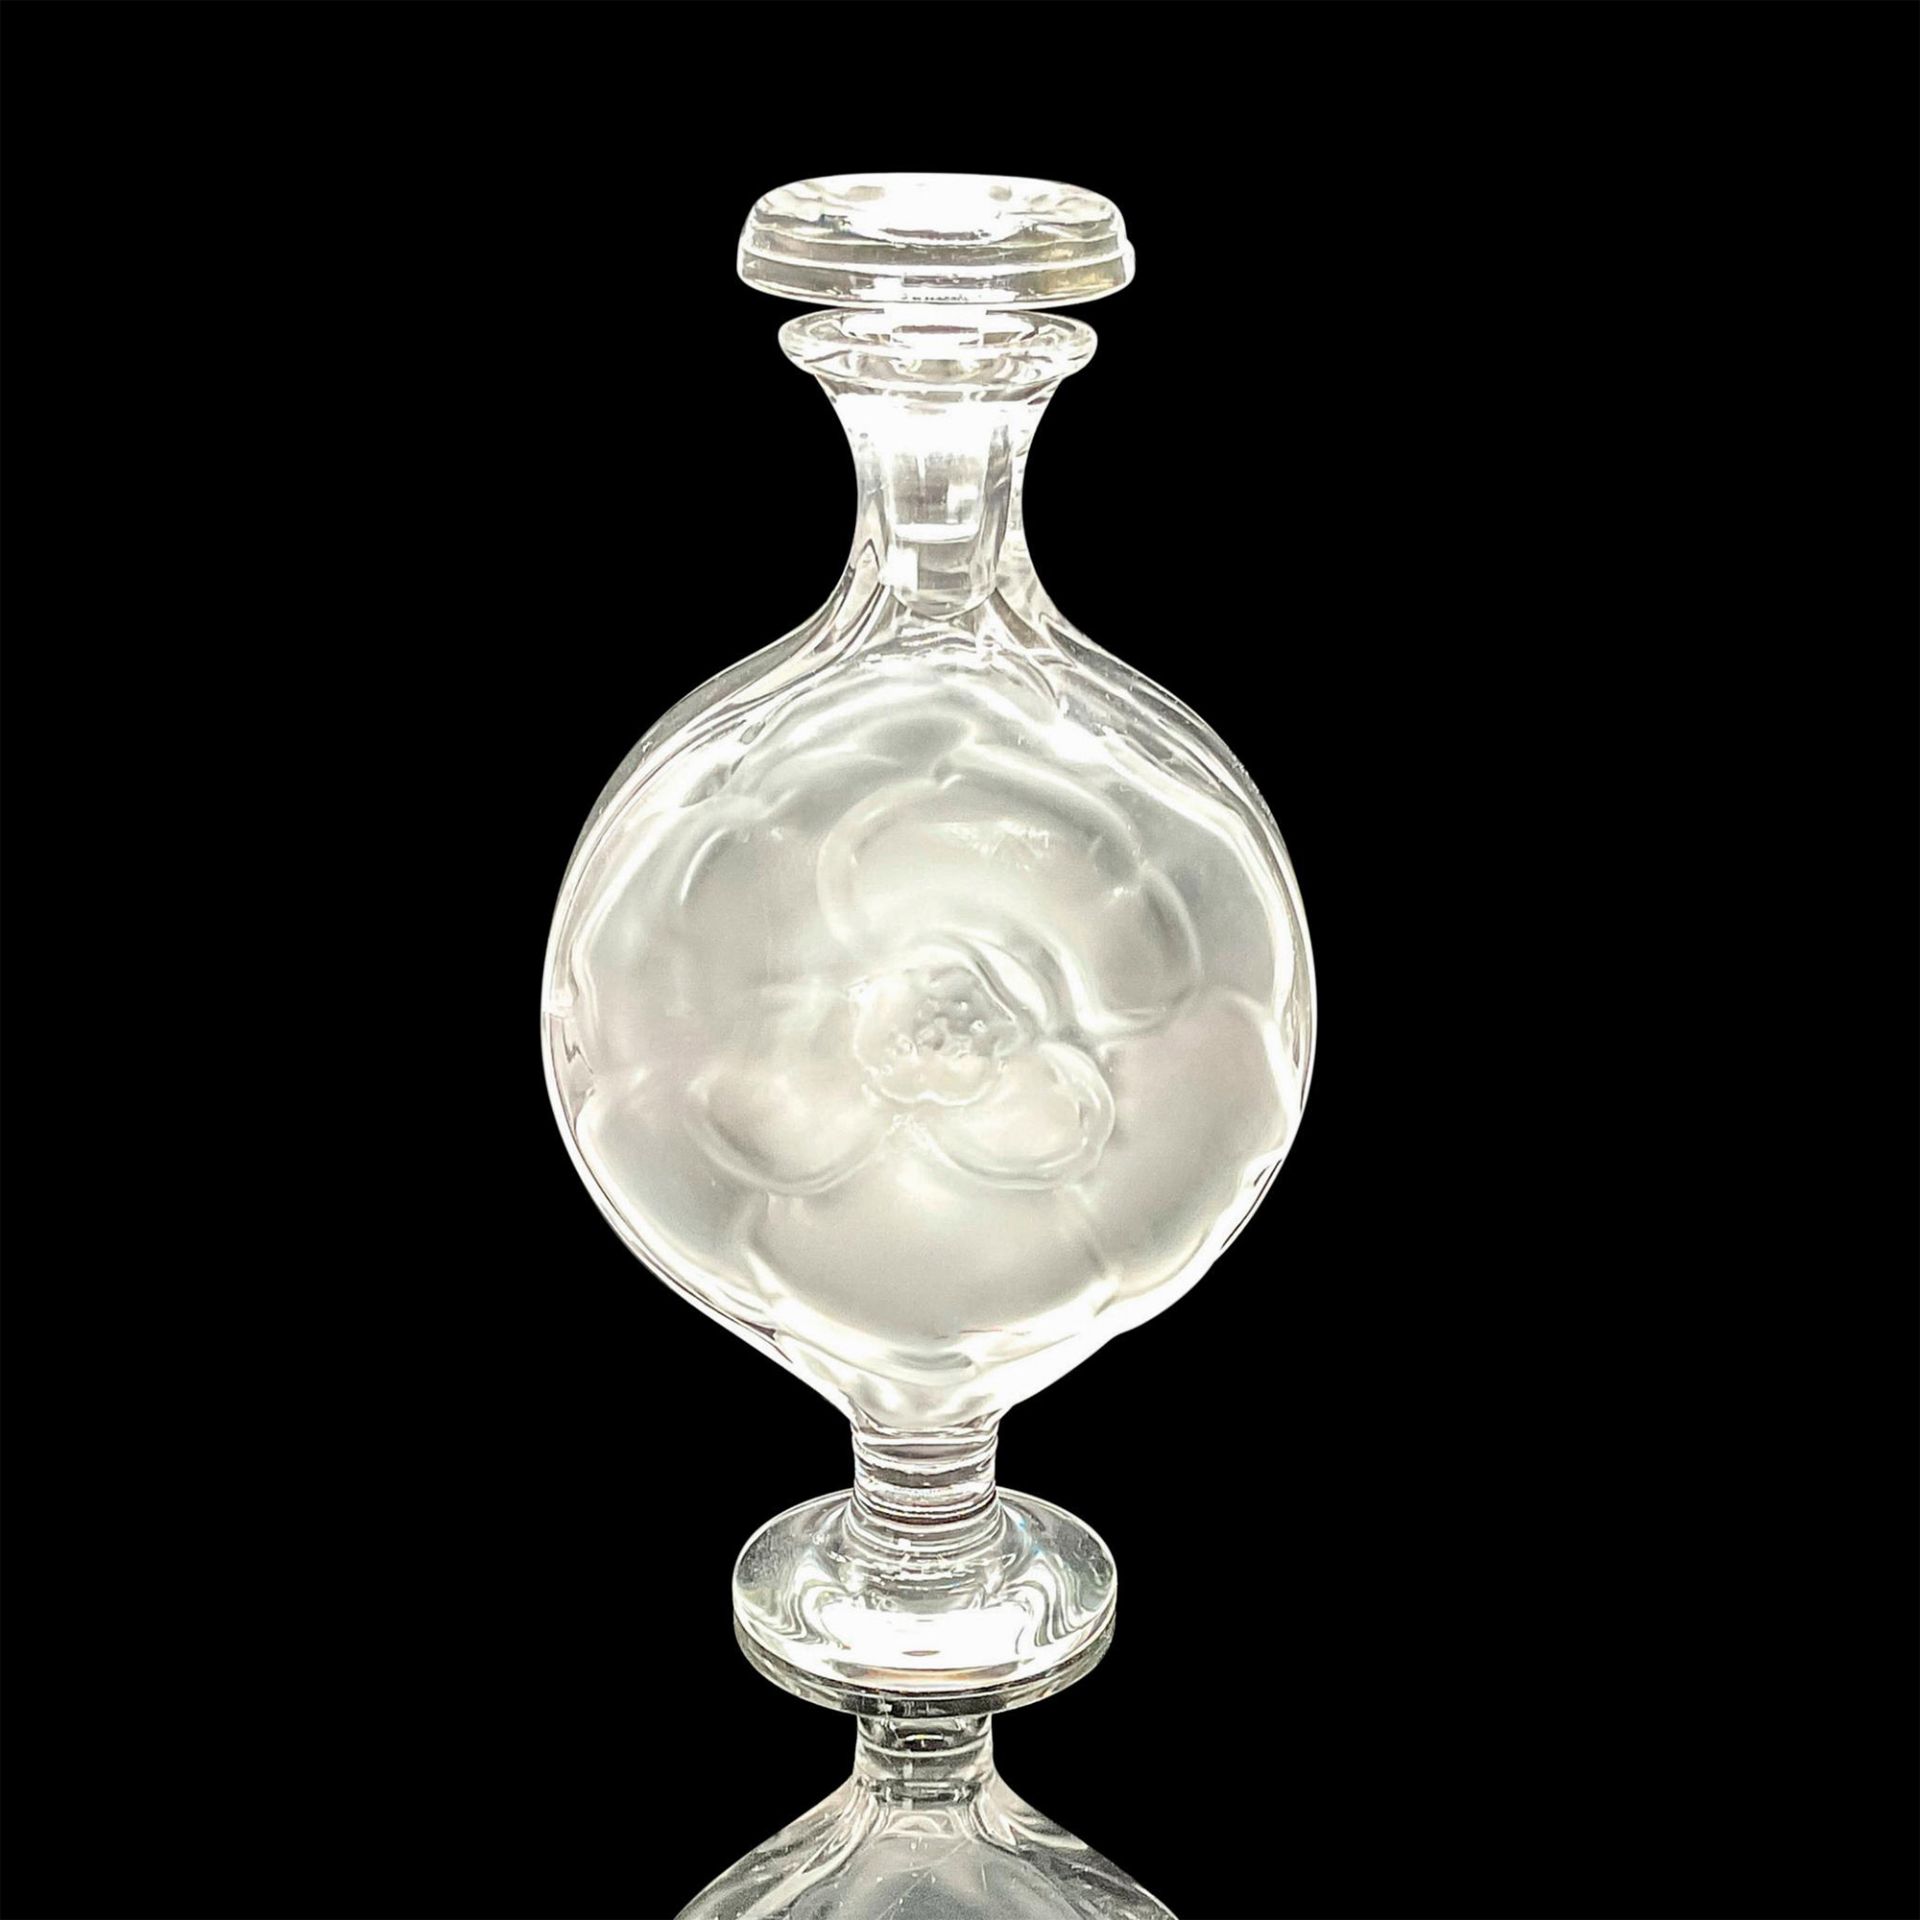 Lalique Crystal Perfume Bottles Moulin Rouge - Image 2 of 3